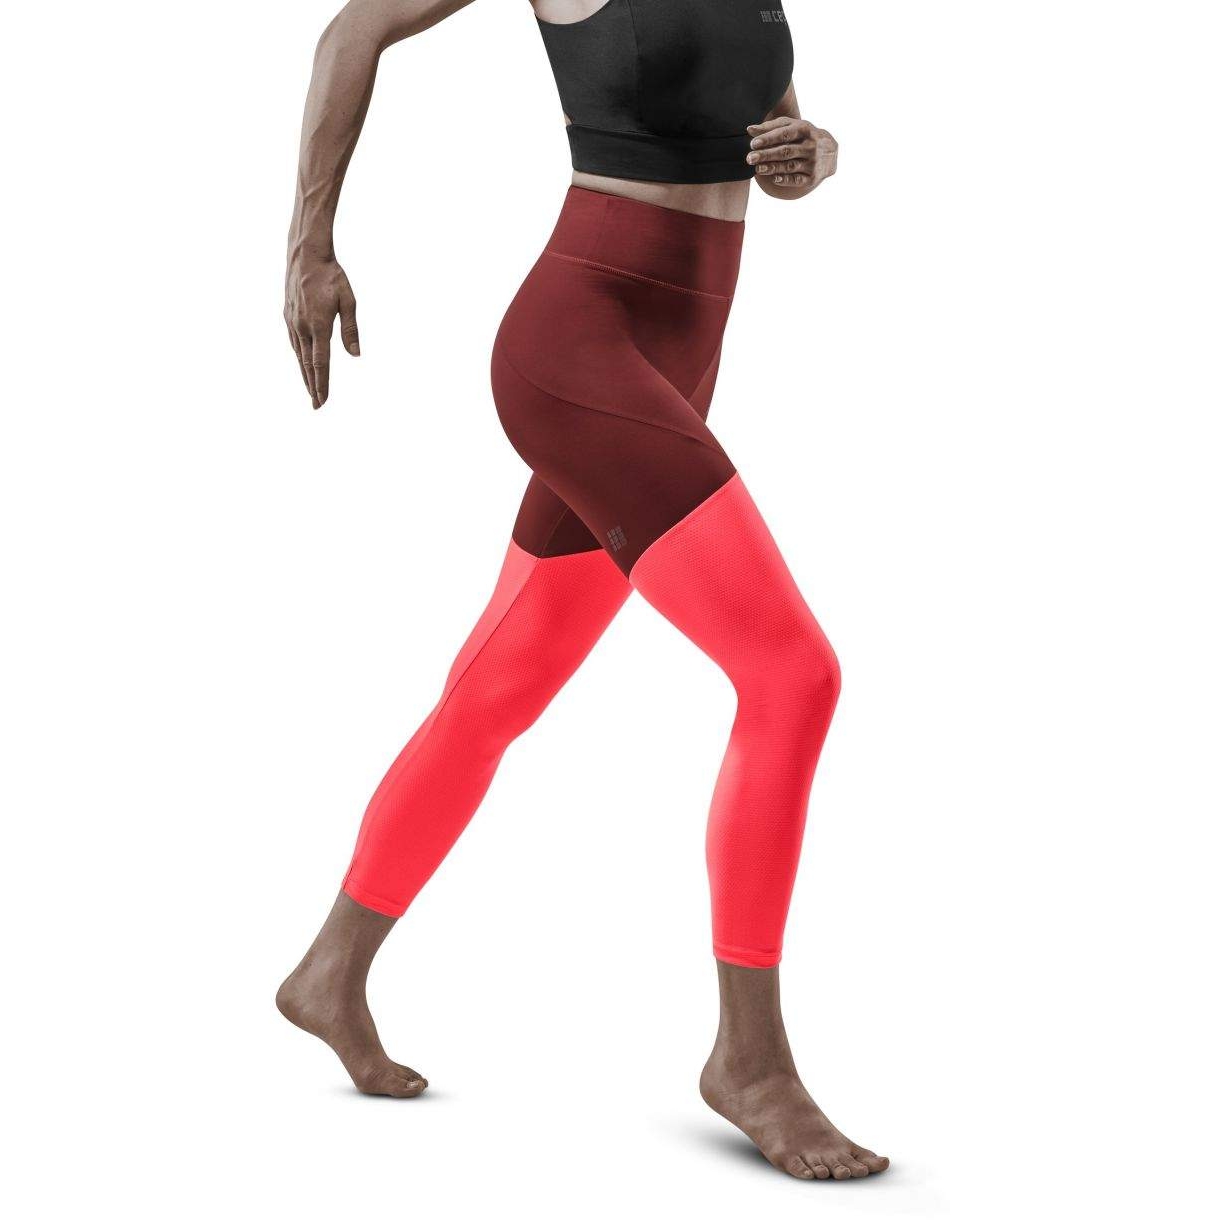 Productfoto van CEP Ultralight 7/8 Legging Dames - dark red/pink